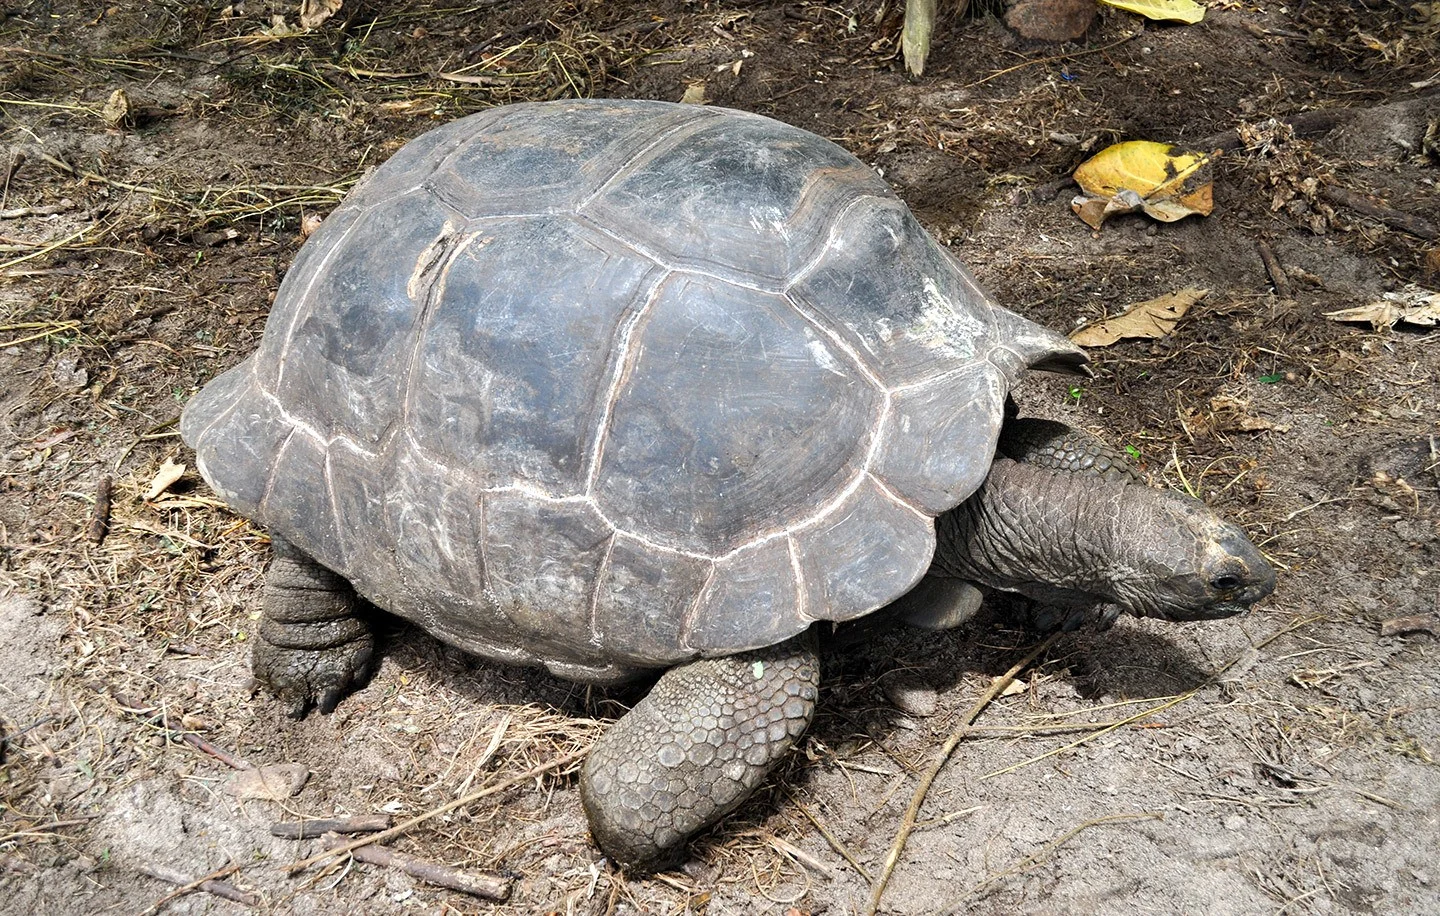 Giant Tortoise in the Seychelles